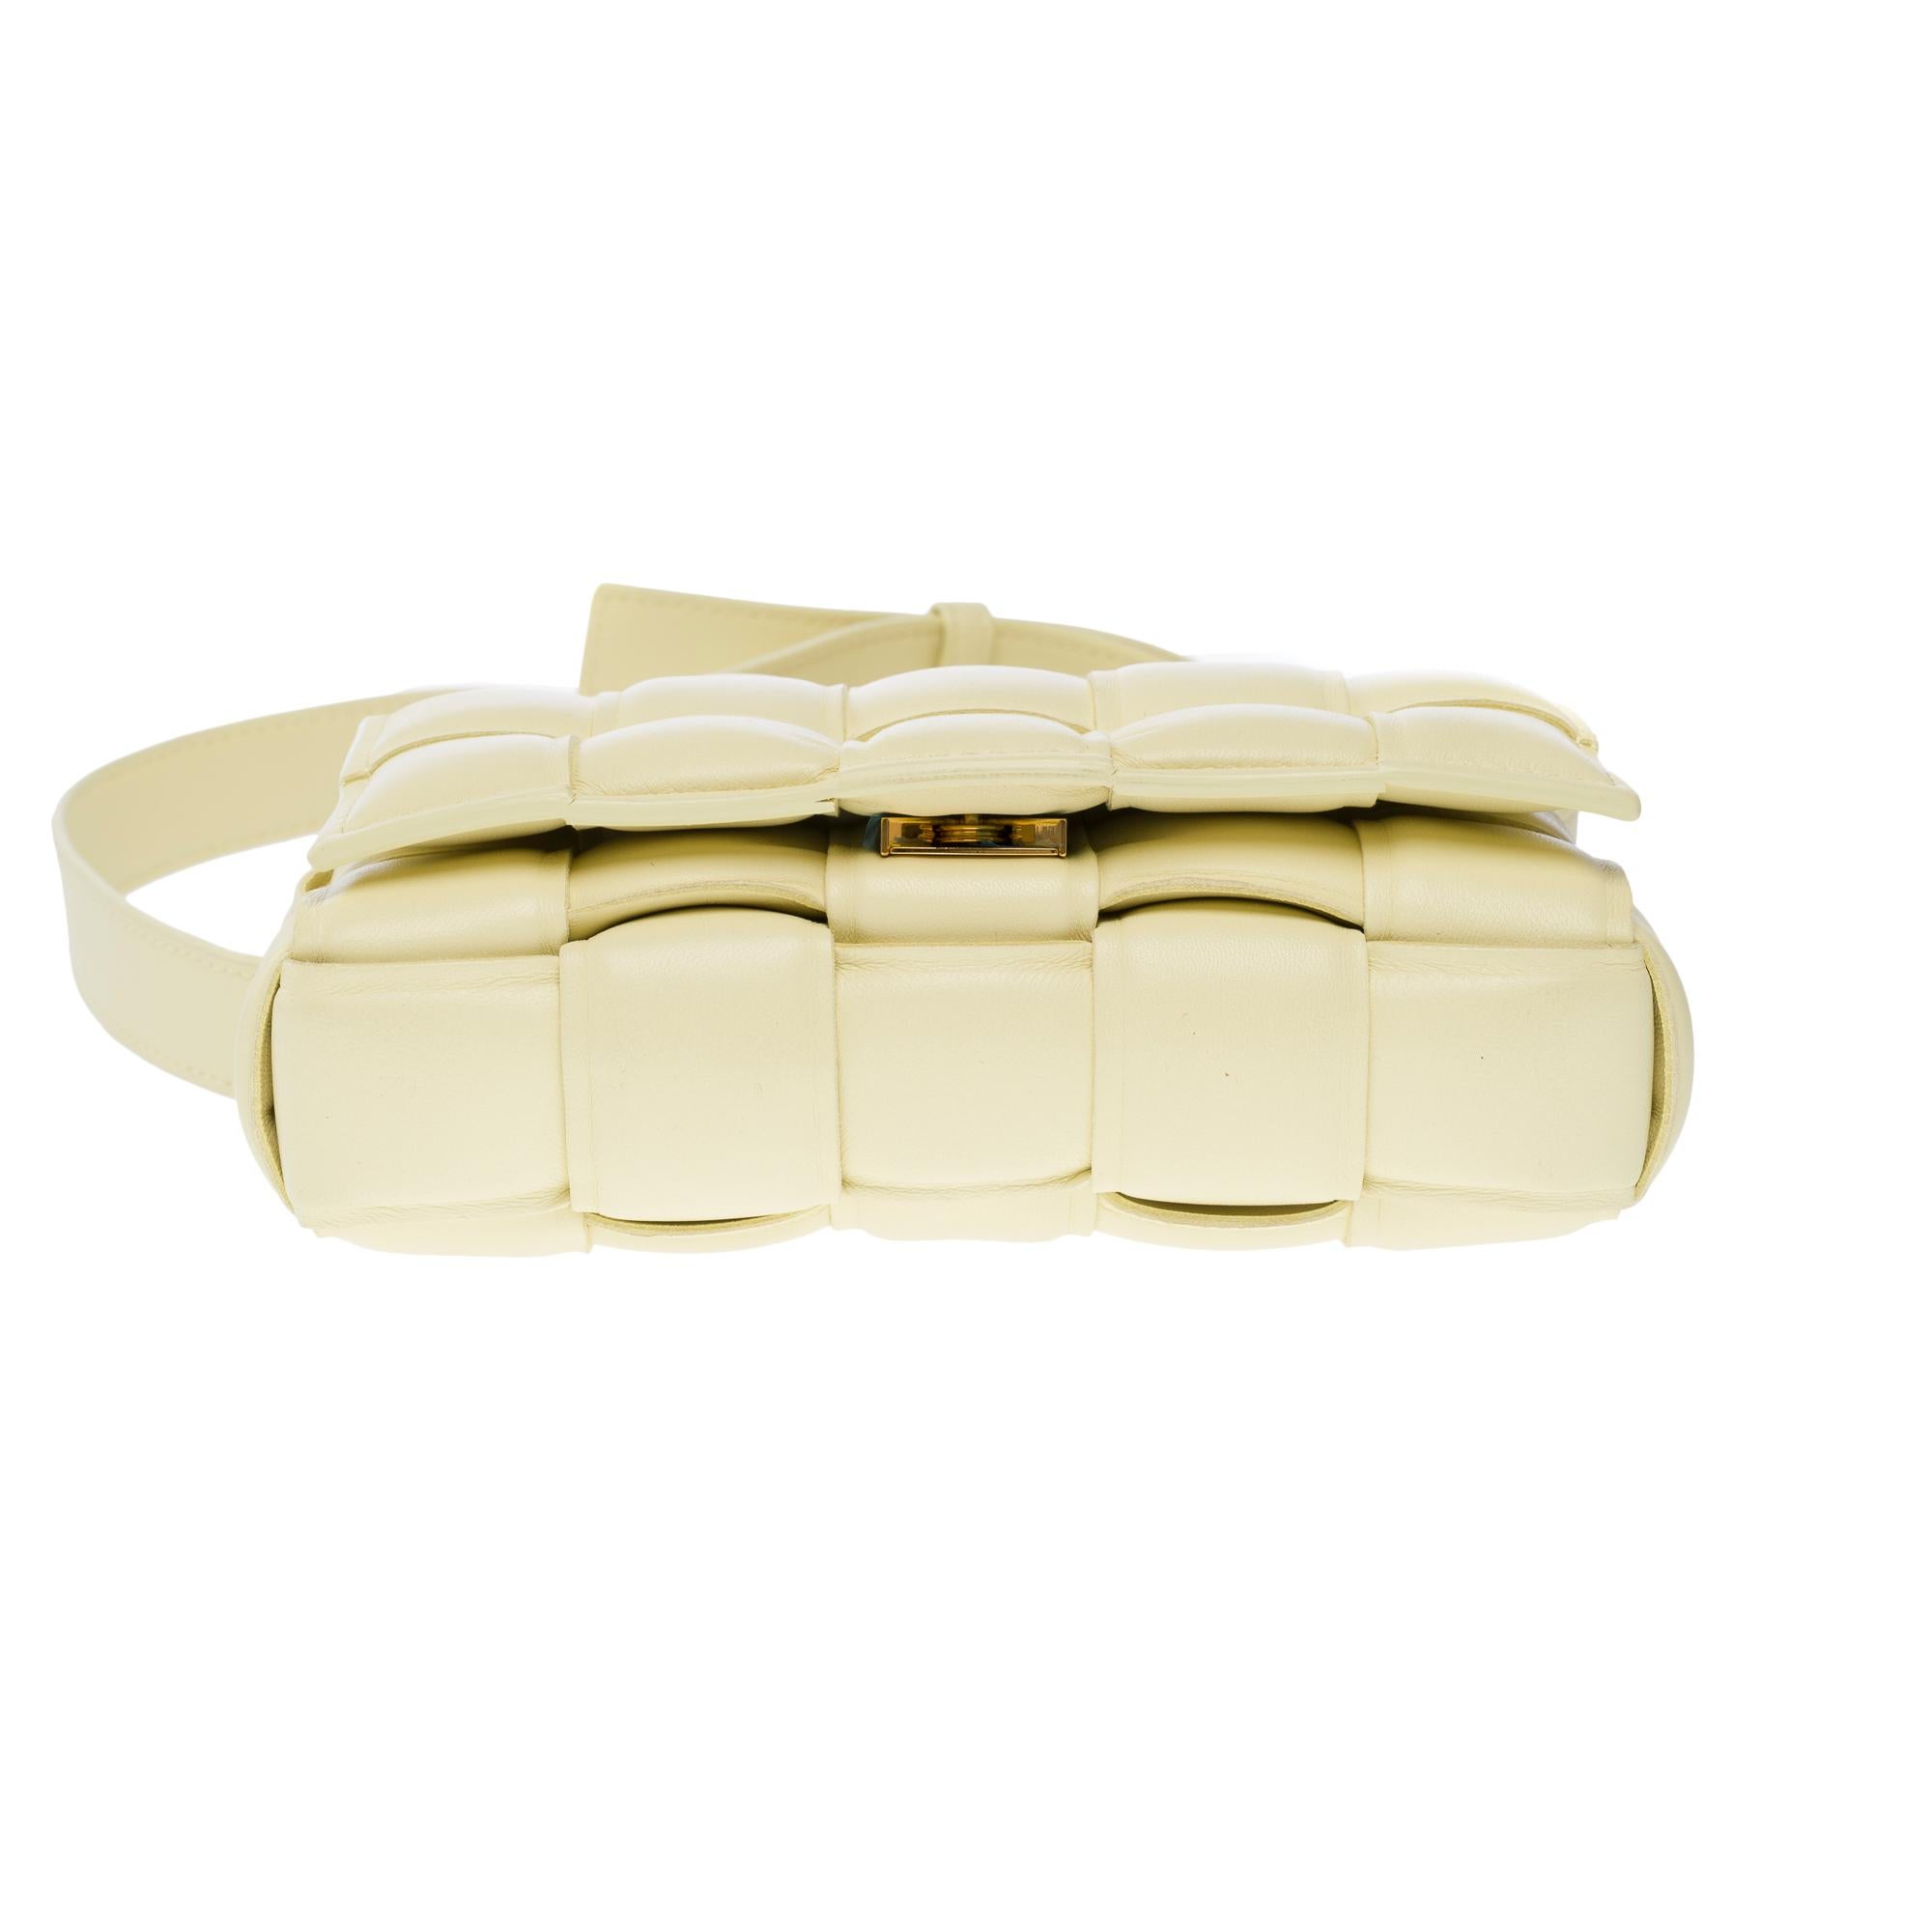 Bottega Veneta Cassette 19 shoulder bag in beige lambskin leather, GHW For Sale 6